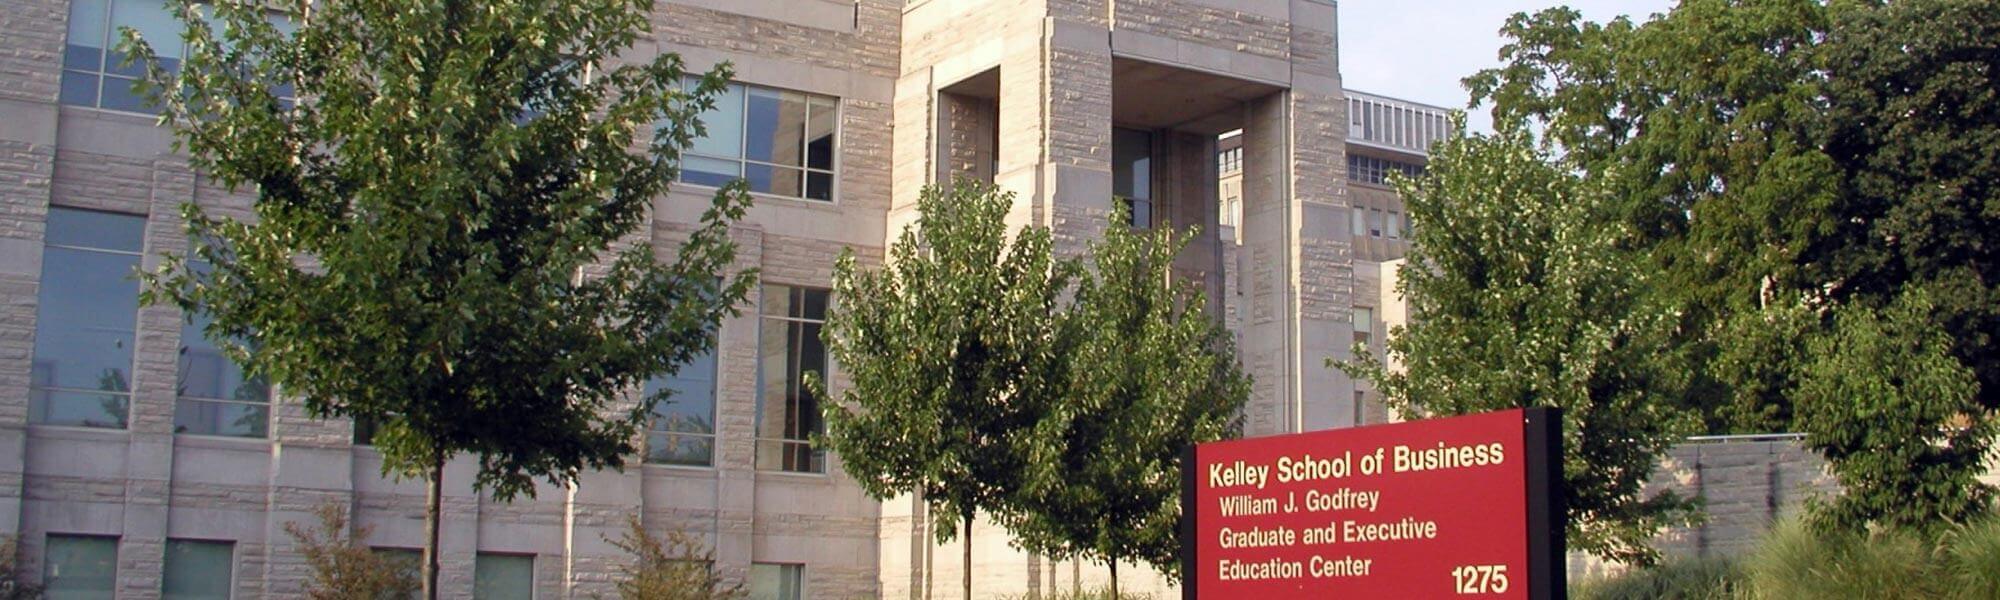 Indiana Kelley MBA Essay Tips for 2019-20